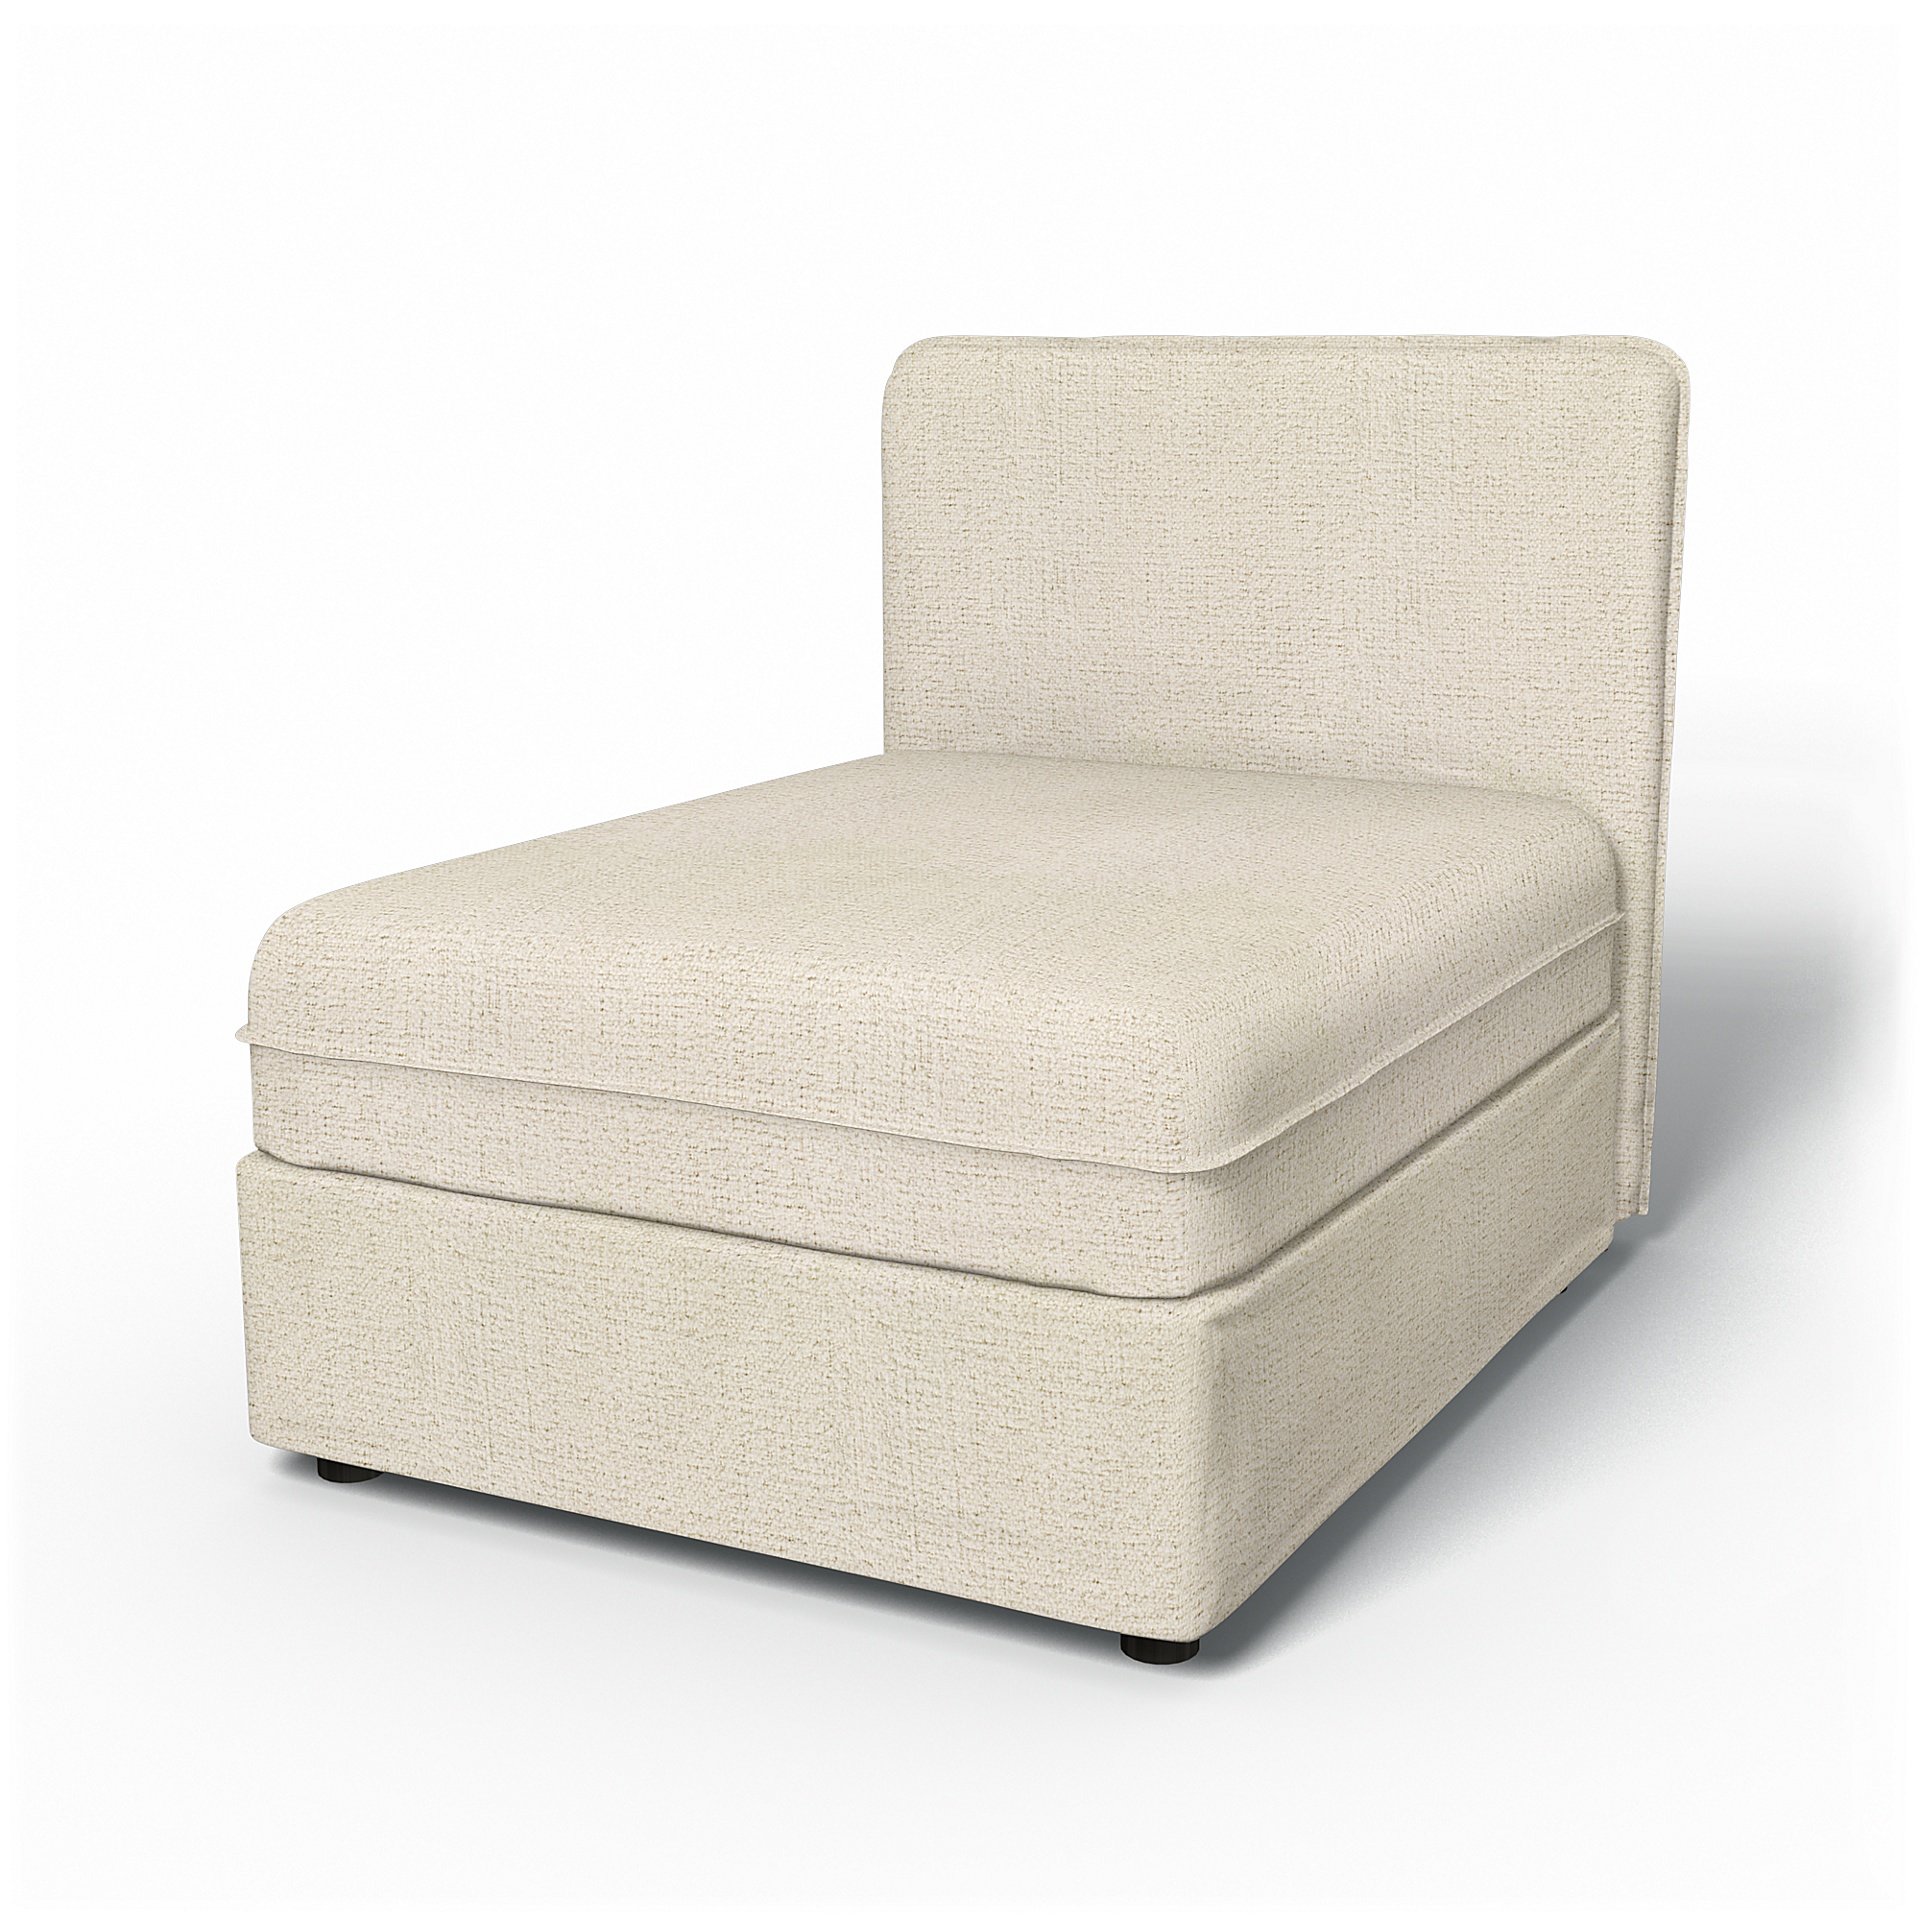 IKEA - Vallentuna Seat Module with Low Back Cover 80x100cm 32x39in, Ecru, Boucle & Texture - Bemz